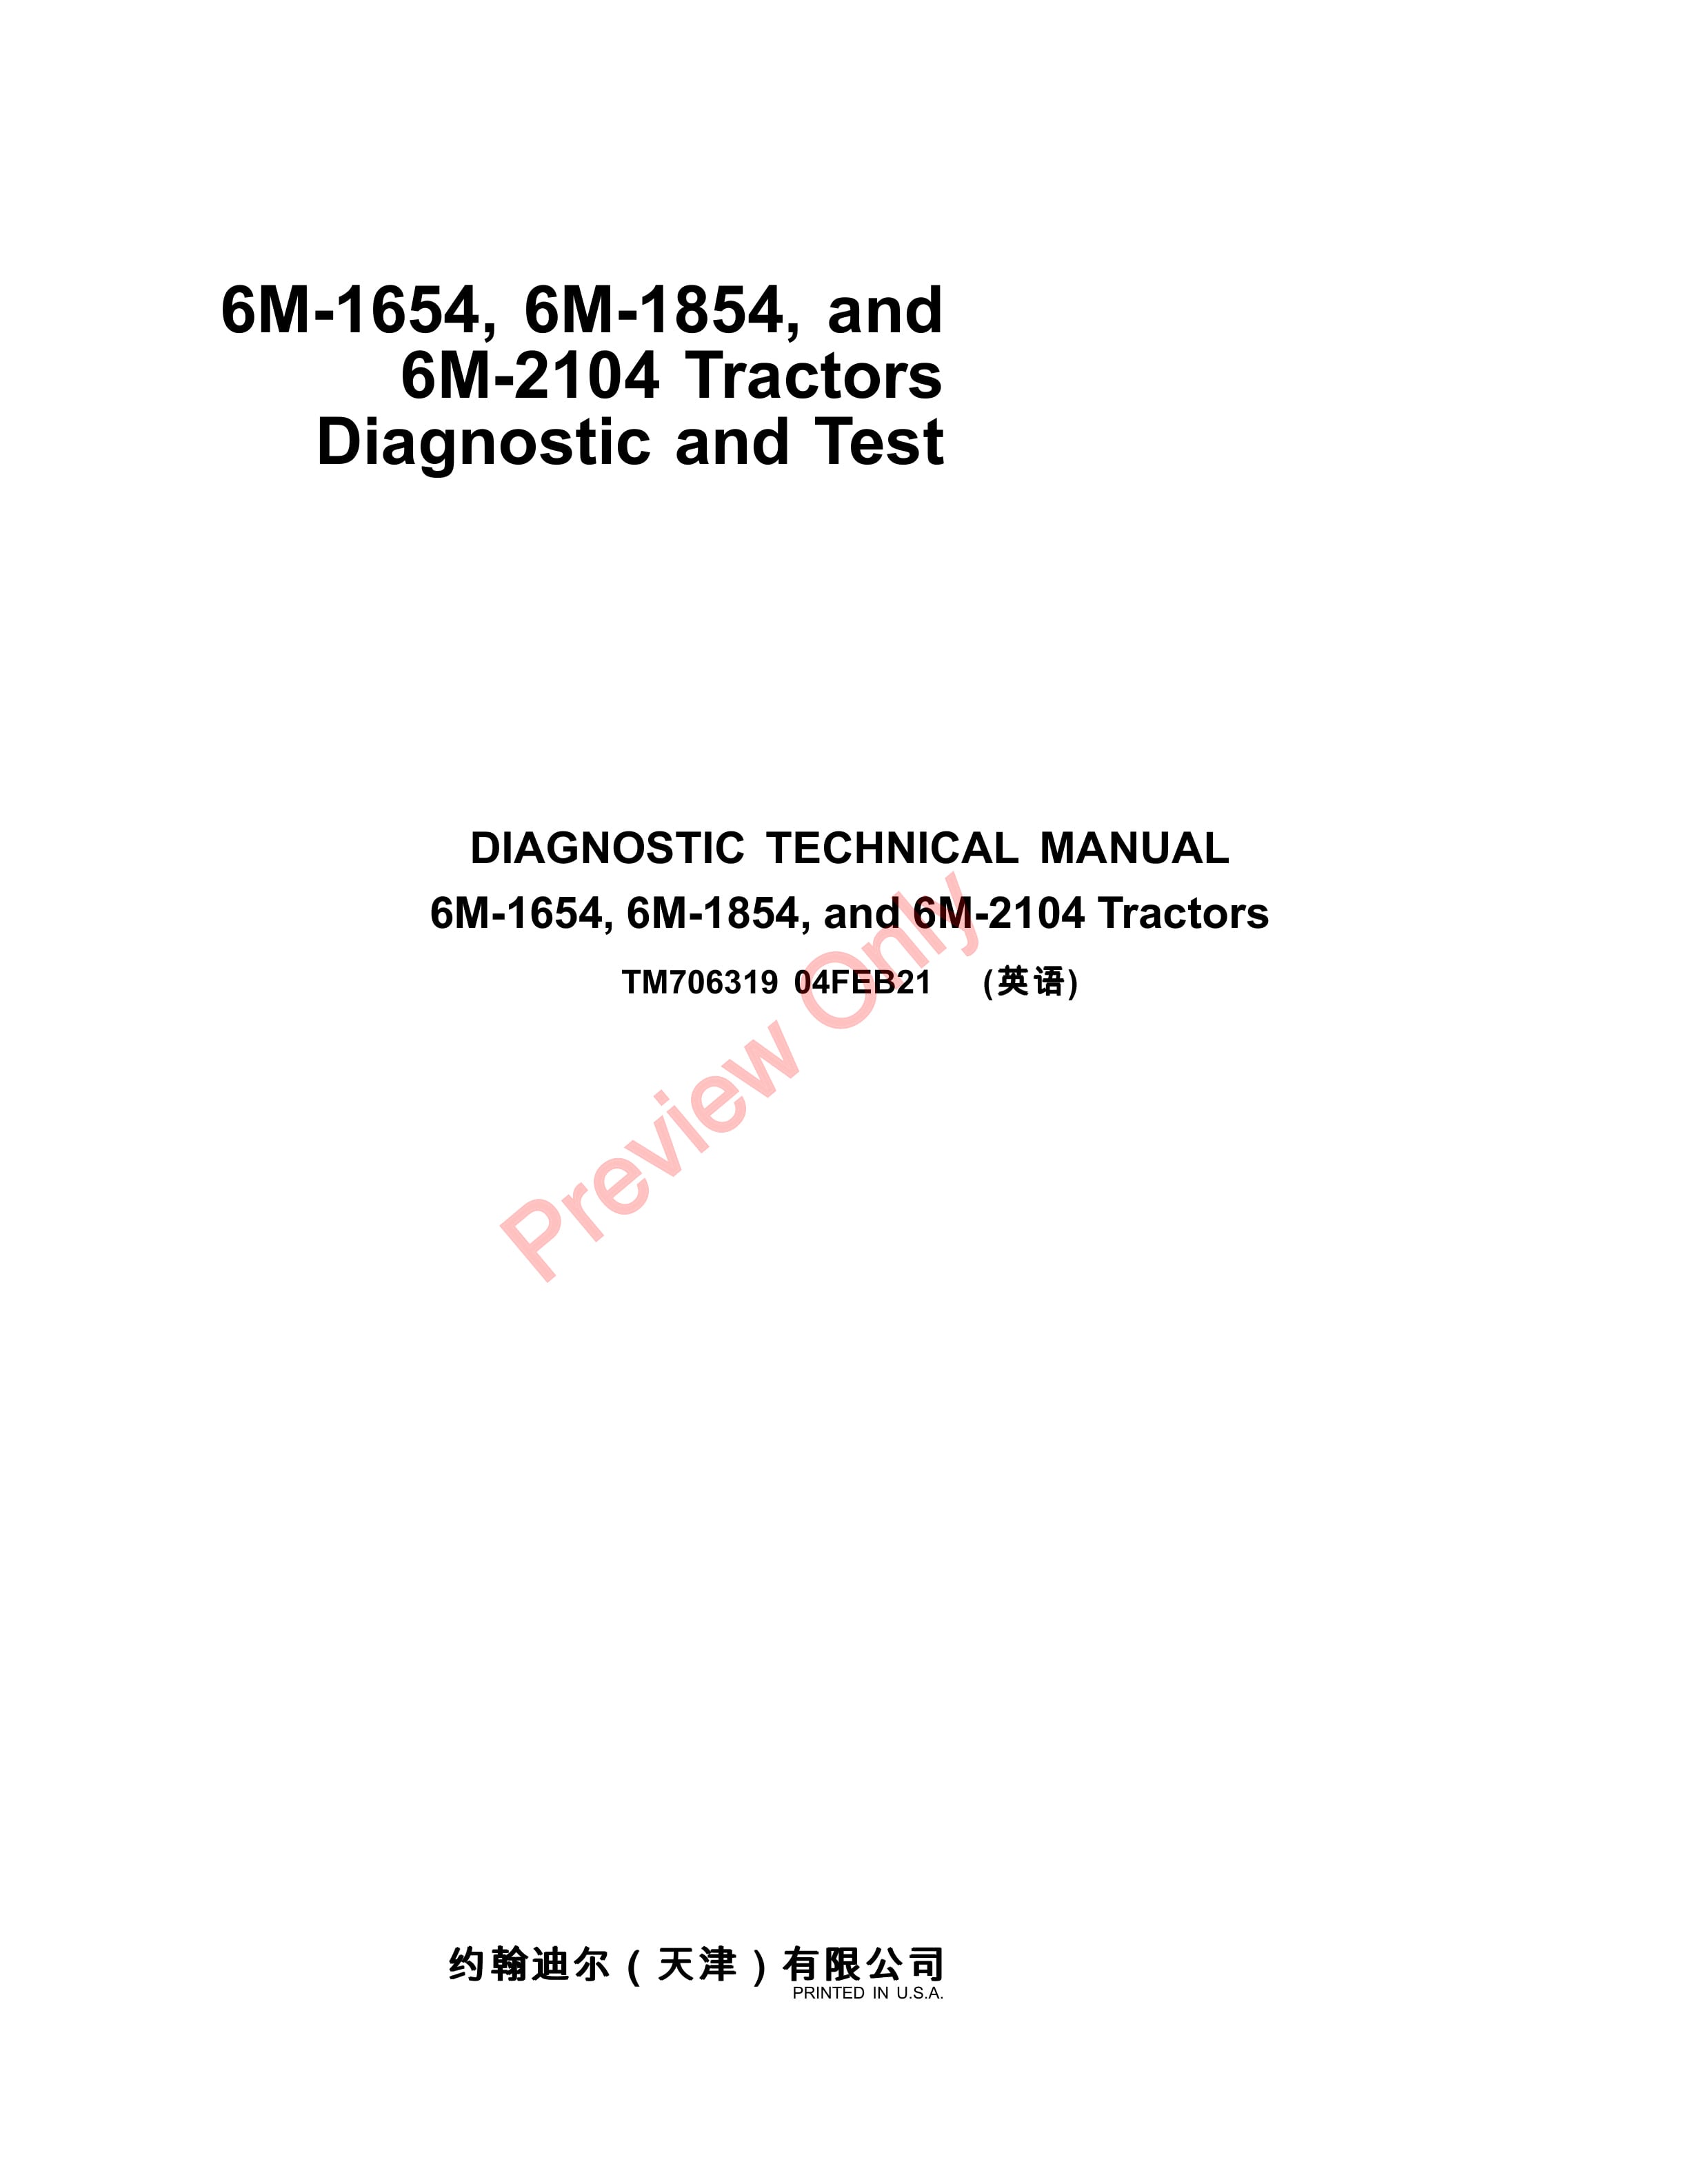 John Deere 6M 1654 6M 1854 and 6M 2104 Tractors Asia English Diagnostic Technical Manual TM706319 04FEB21 1